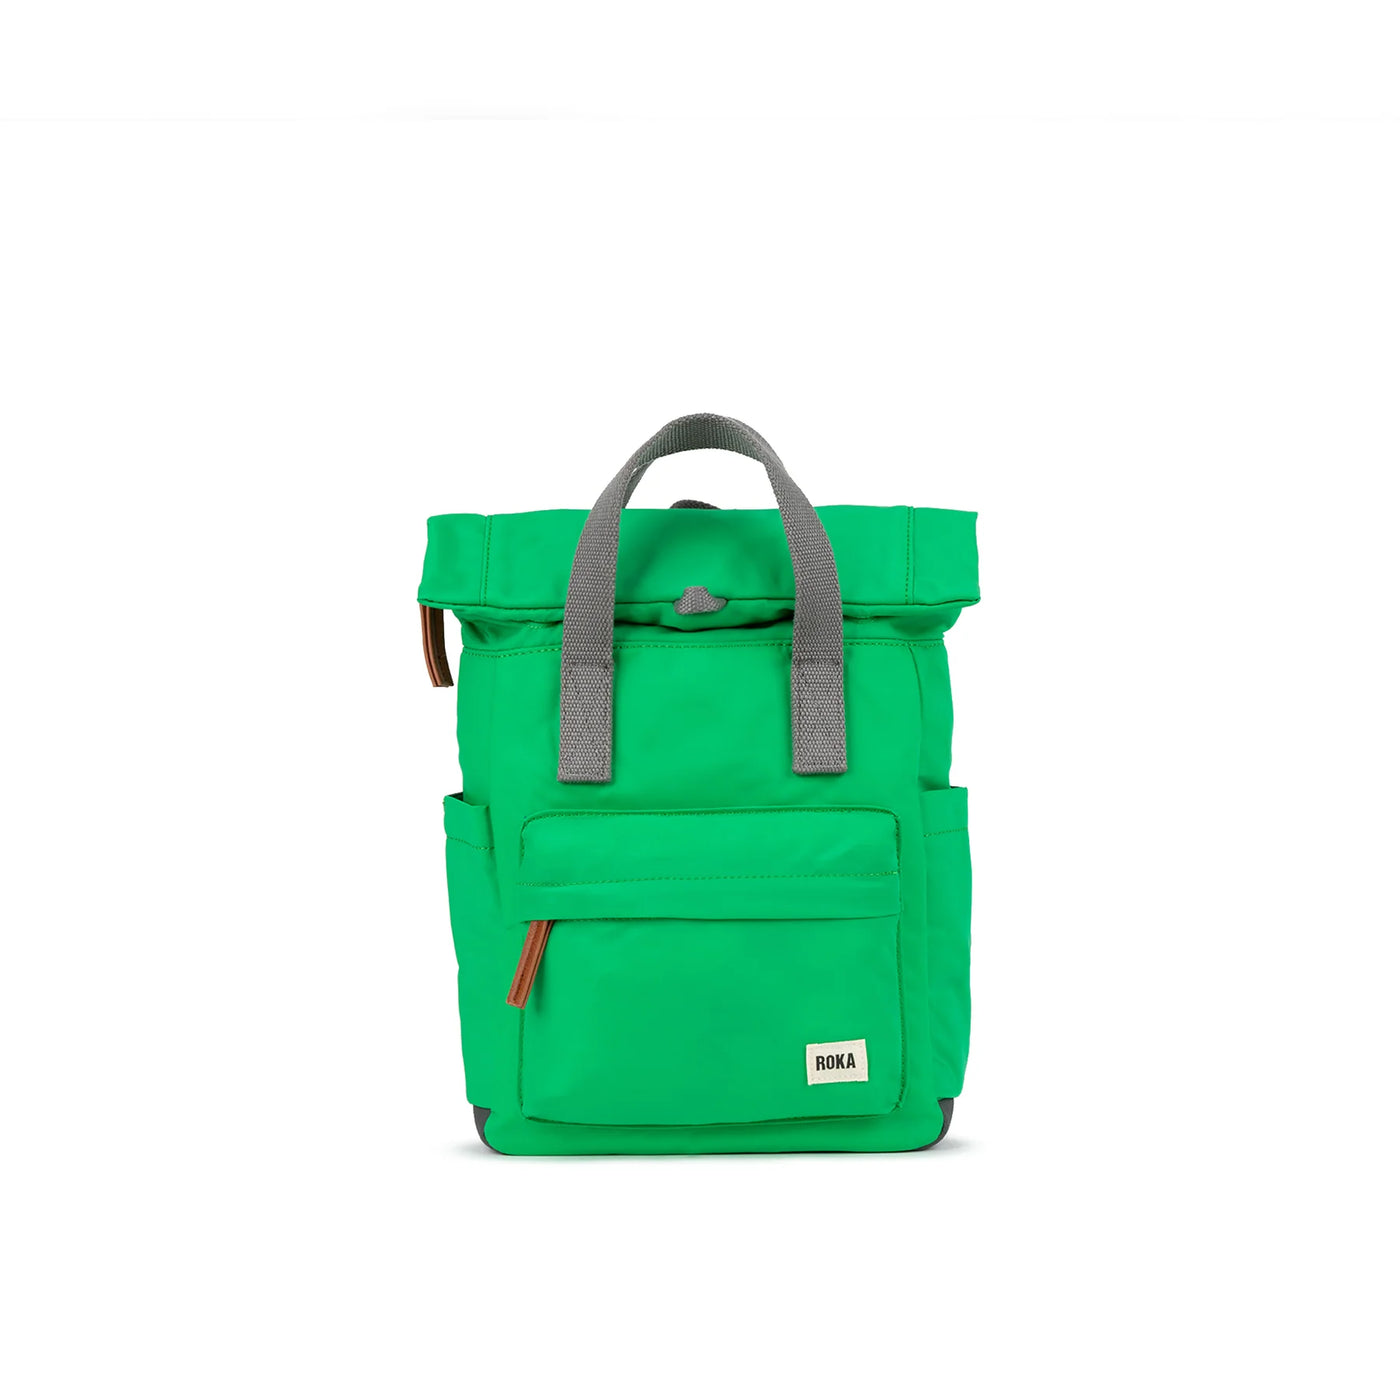 Roka Canfield B Backpack-Recycled Nylon - SMALL - Green Apple